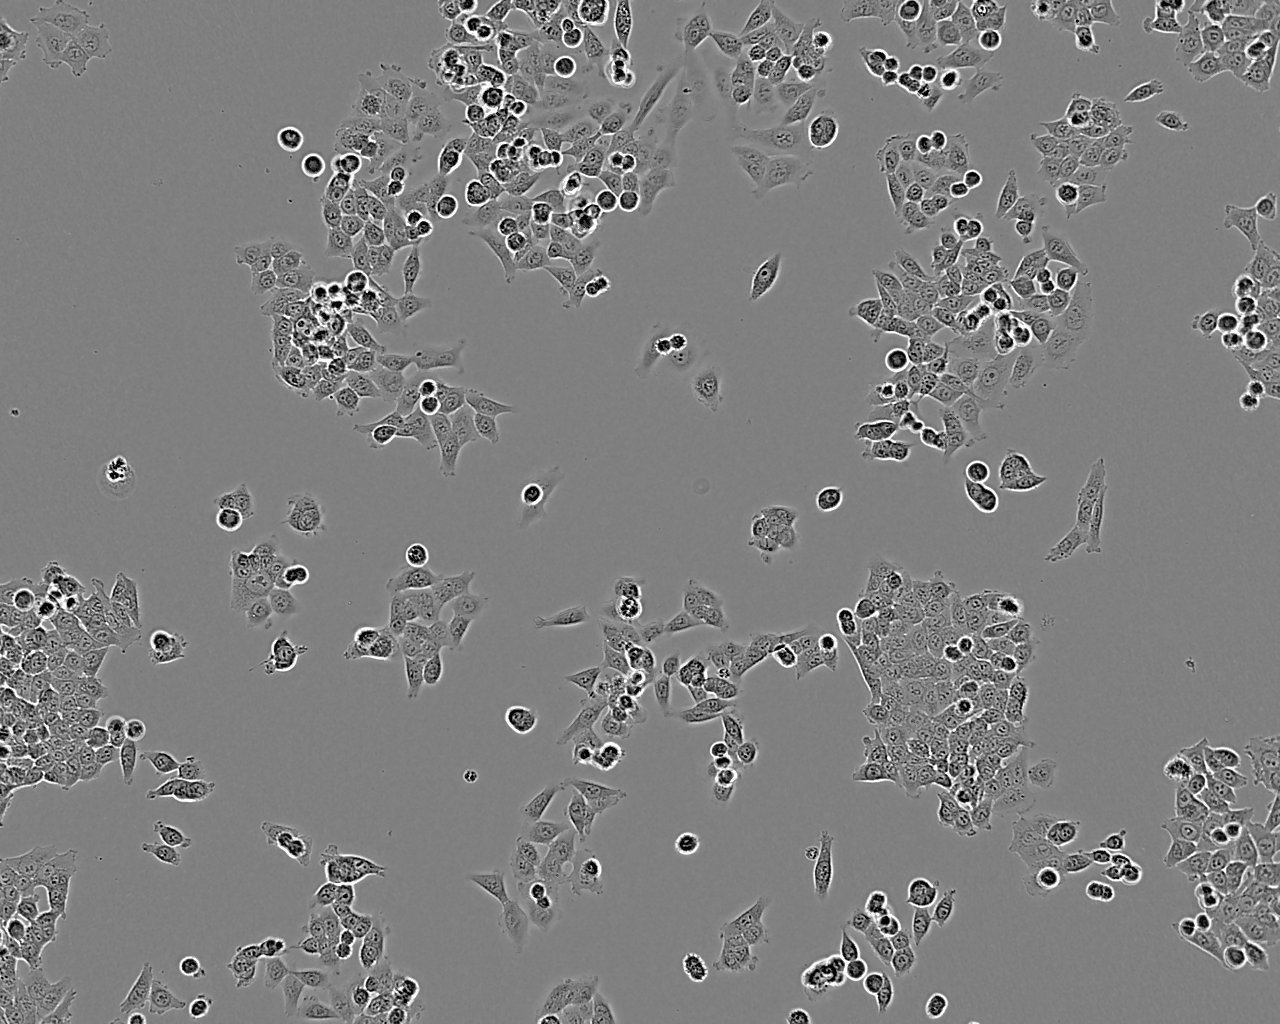 SV-HUC-1 epithelioid cells人膀胱上皮永生化细胞系,SV-HUC-1 epithelioid cells